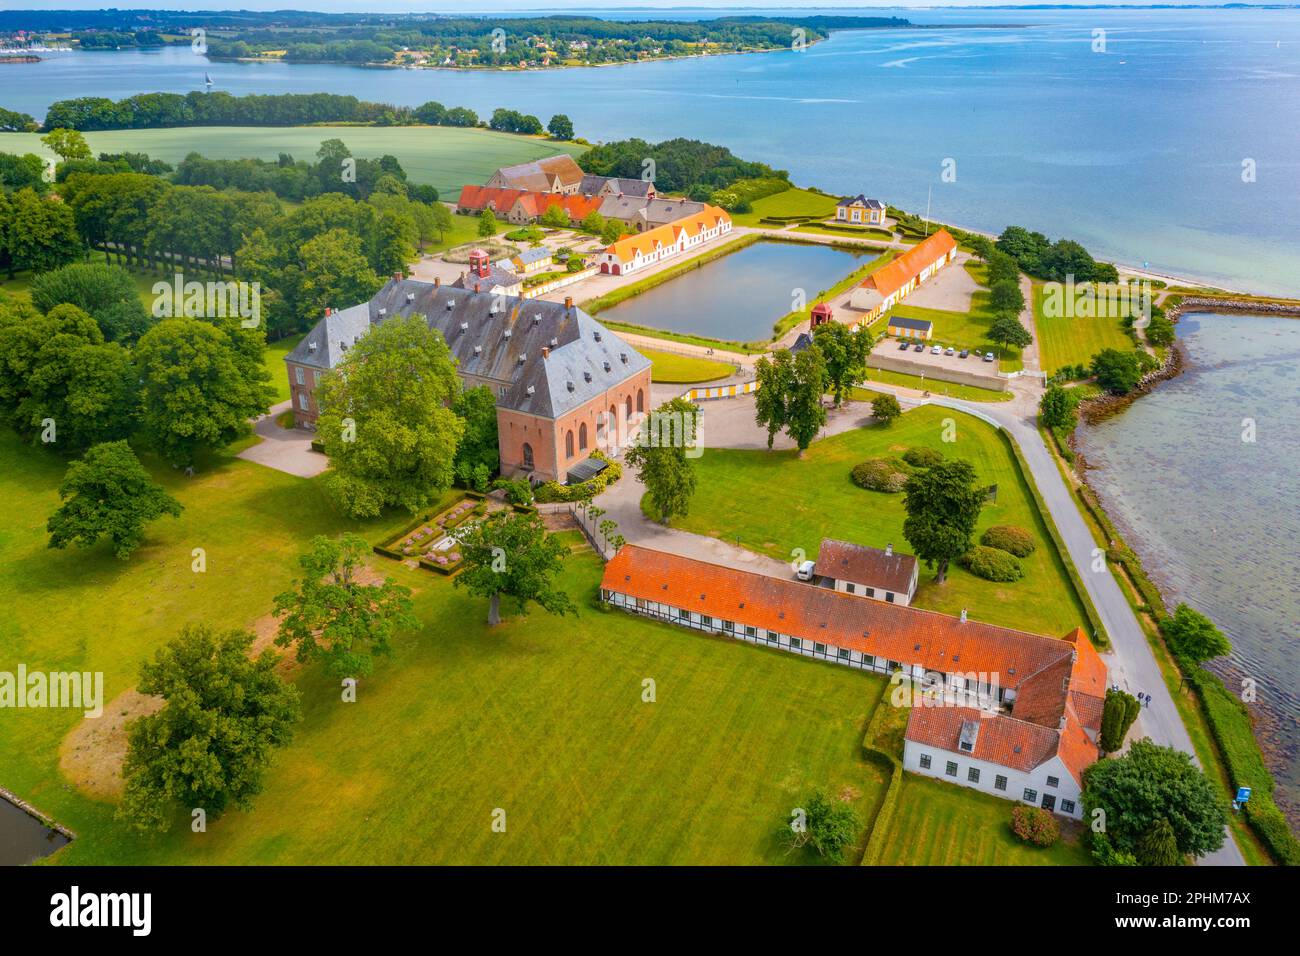 Valdemars Slot in Denmark during a summer day. Stock Photo